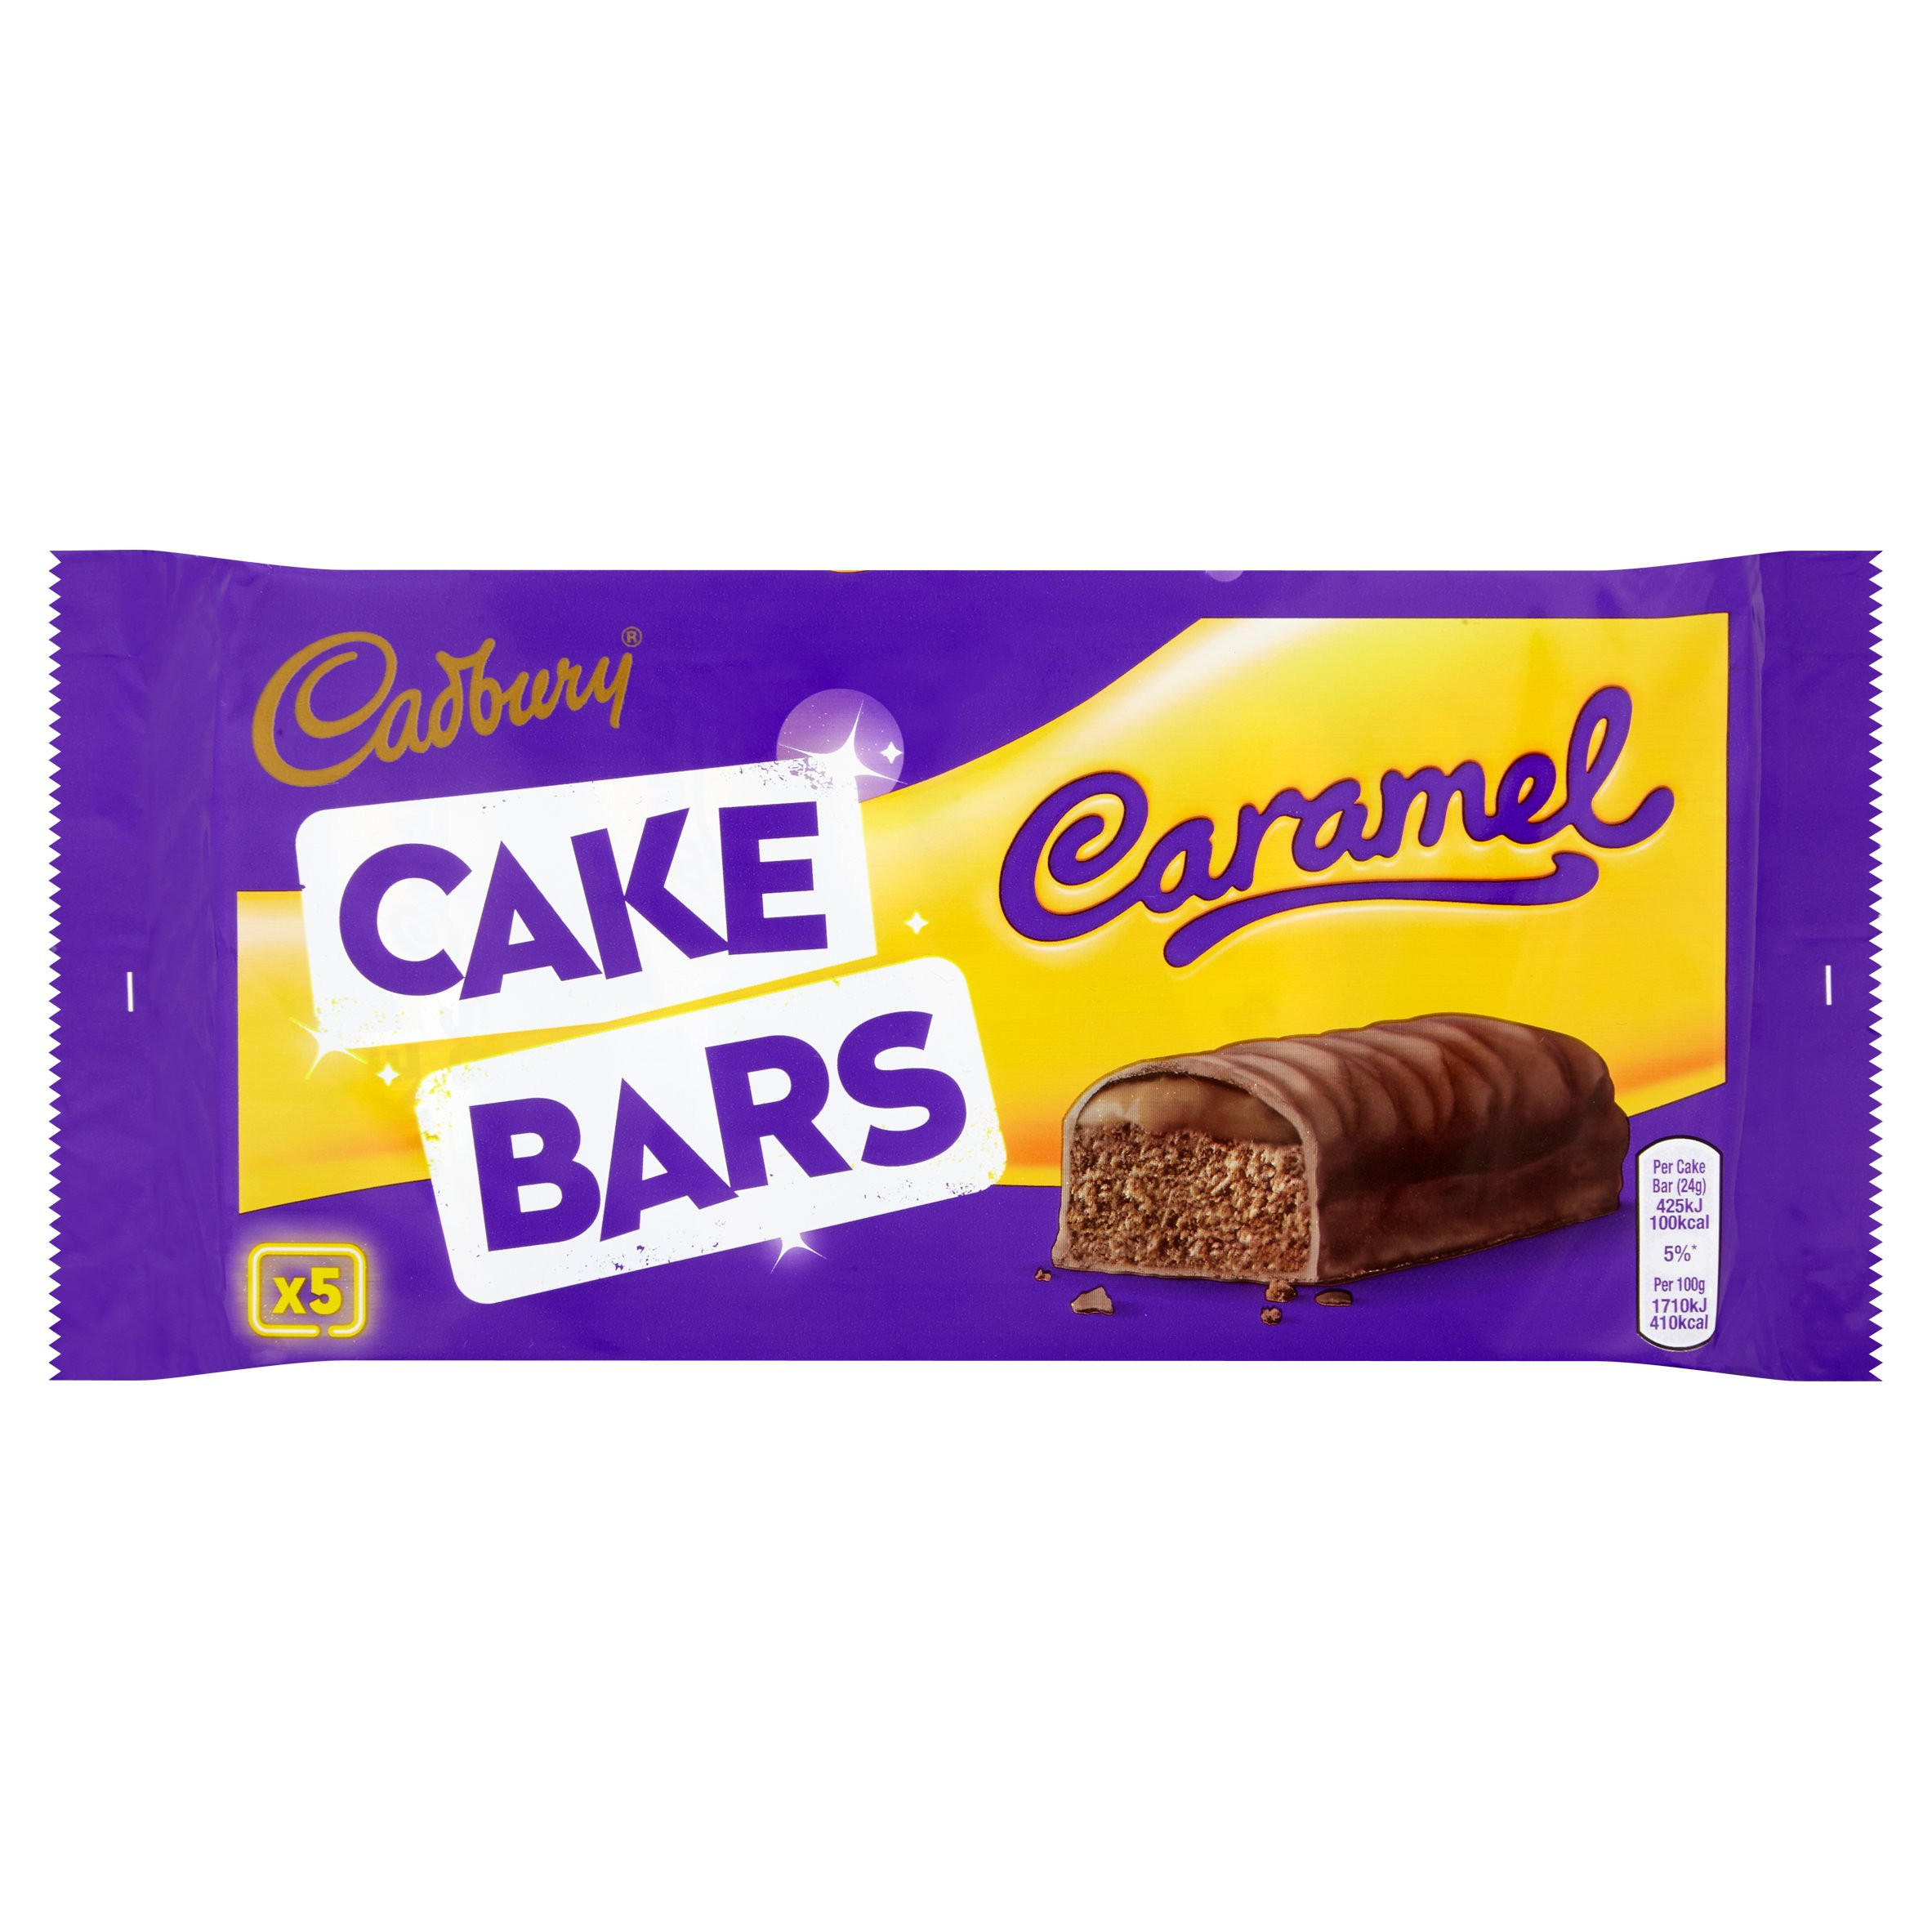 Cadbury Caramel Cake Bars X 5 Mini Rolls And Cake Bars